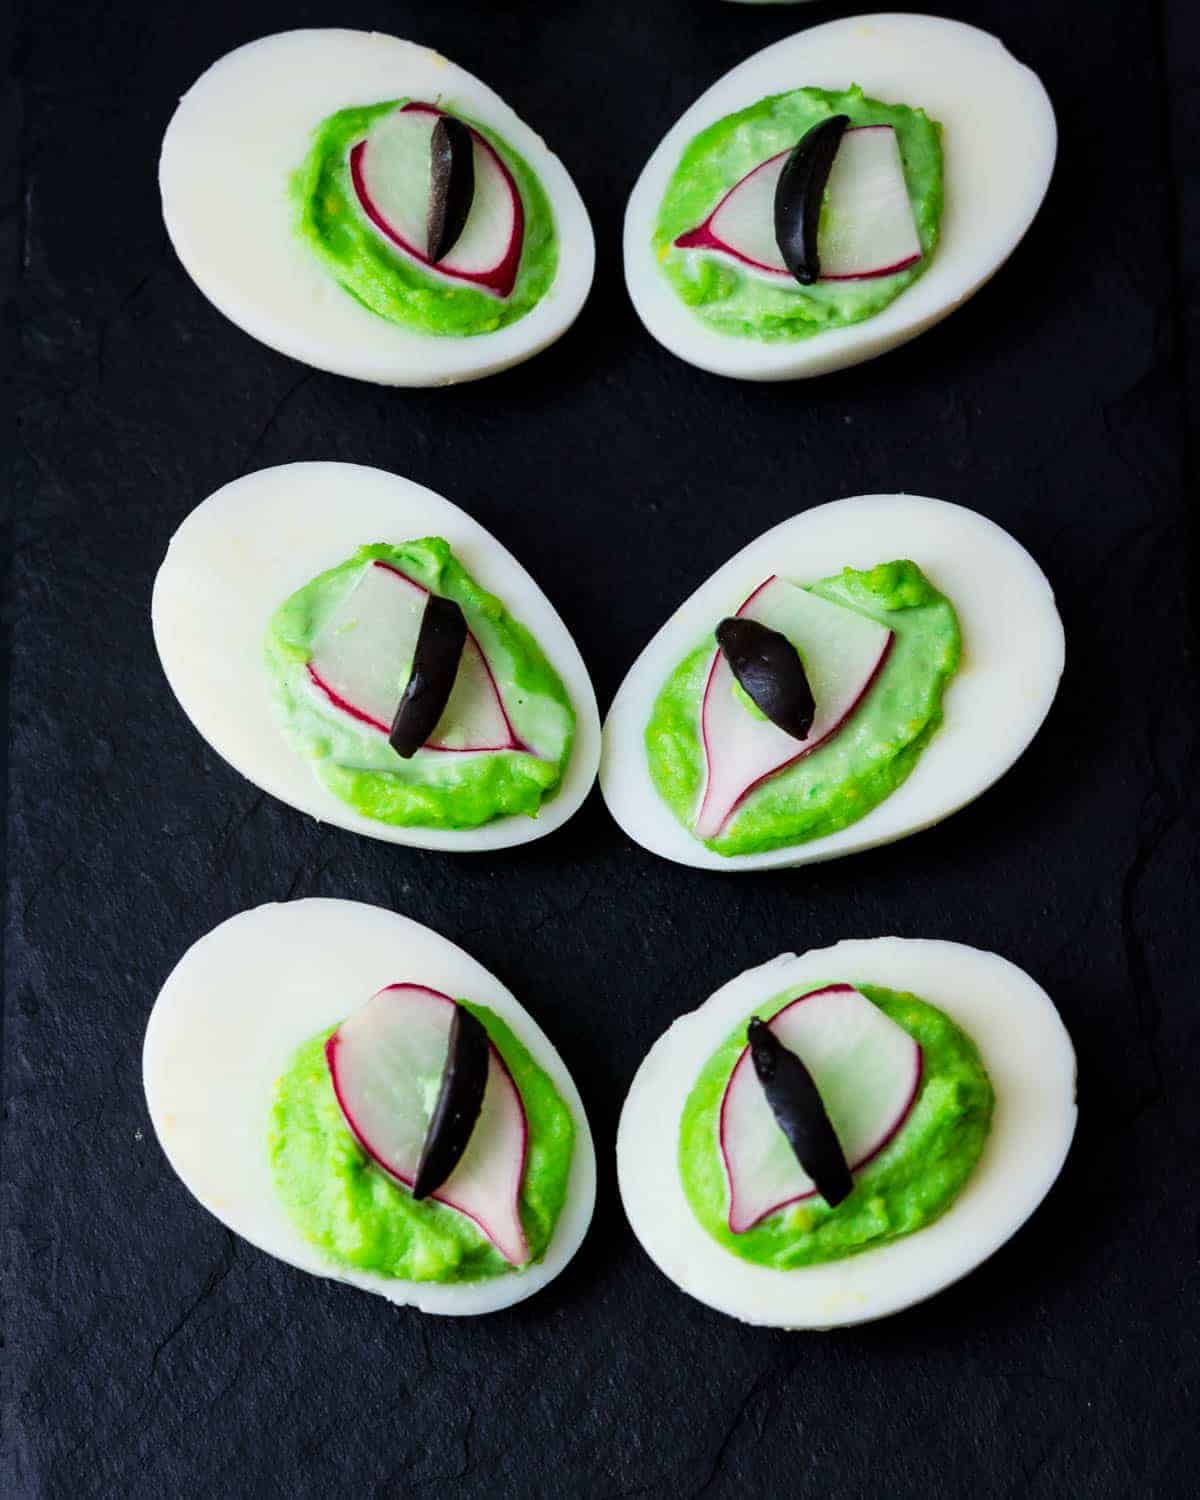 Healthy Halloween treats - deviled eggs designed to look like spooky eyeballs on a black background.